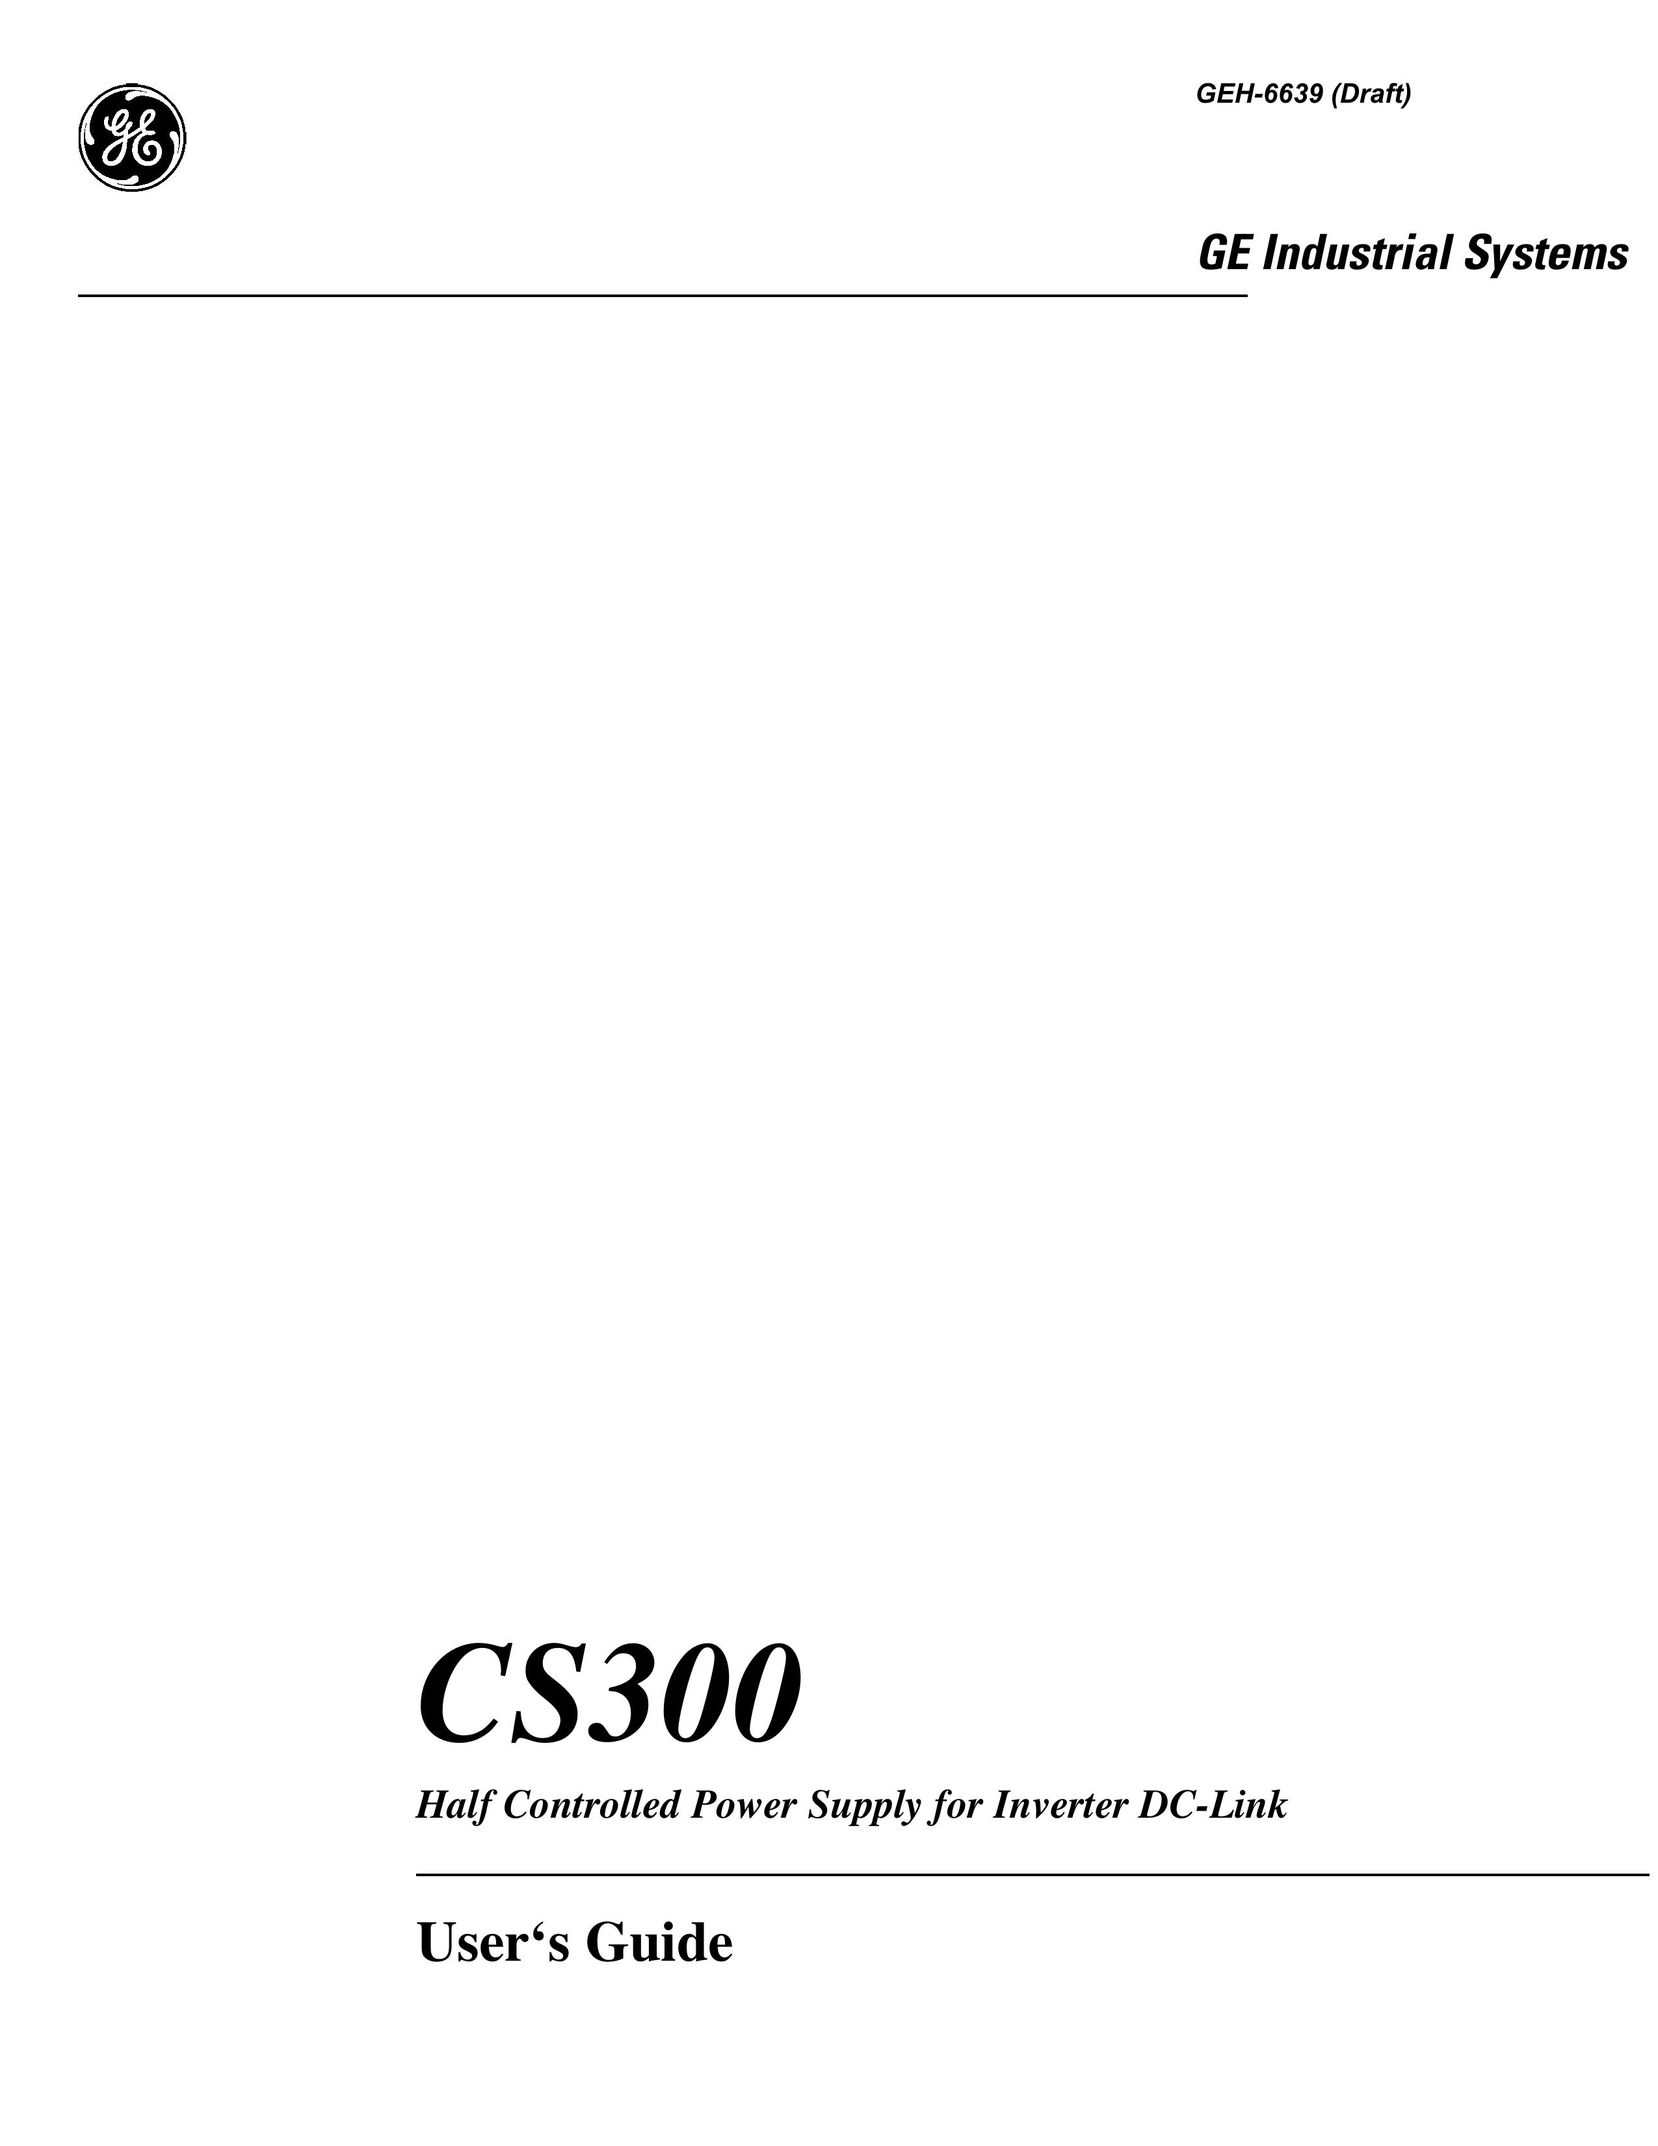 GE CS300 Power Supply User Manual